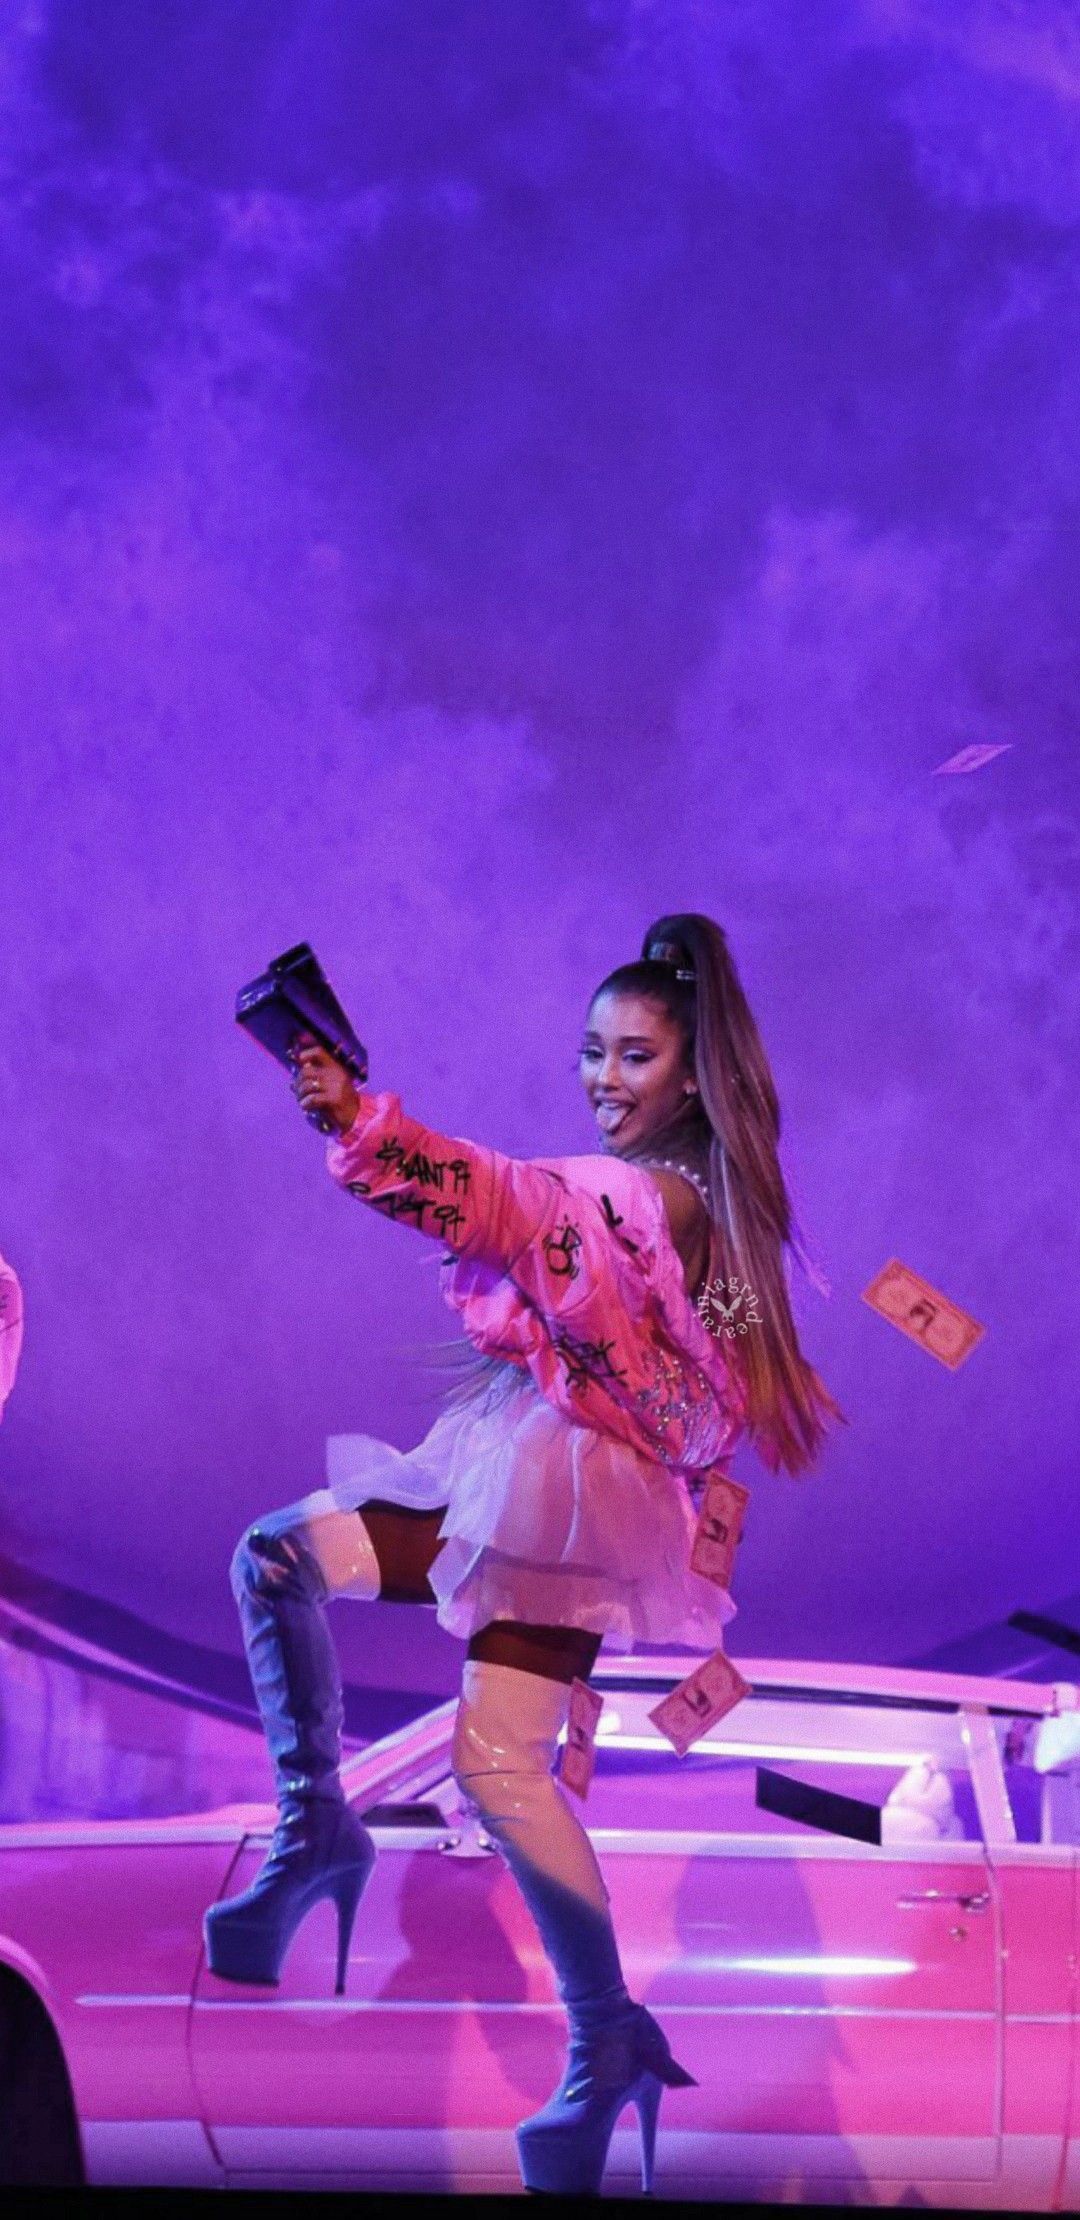 ariana grande wallpaper / sweetener world tour #arianagrande Yeet #Ariana # Grande #To. Ariana grande lockscreen, Ariana grande sweetener, Ariana grande wallpaper